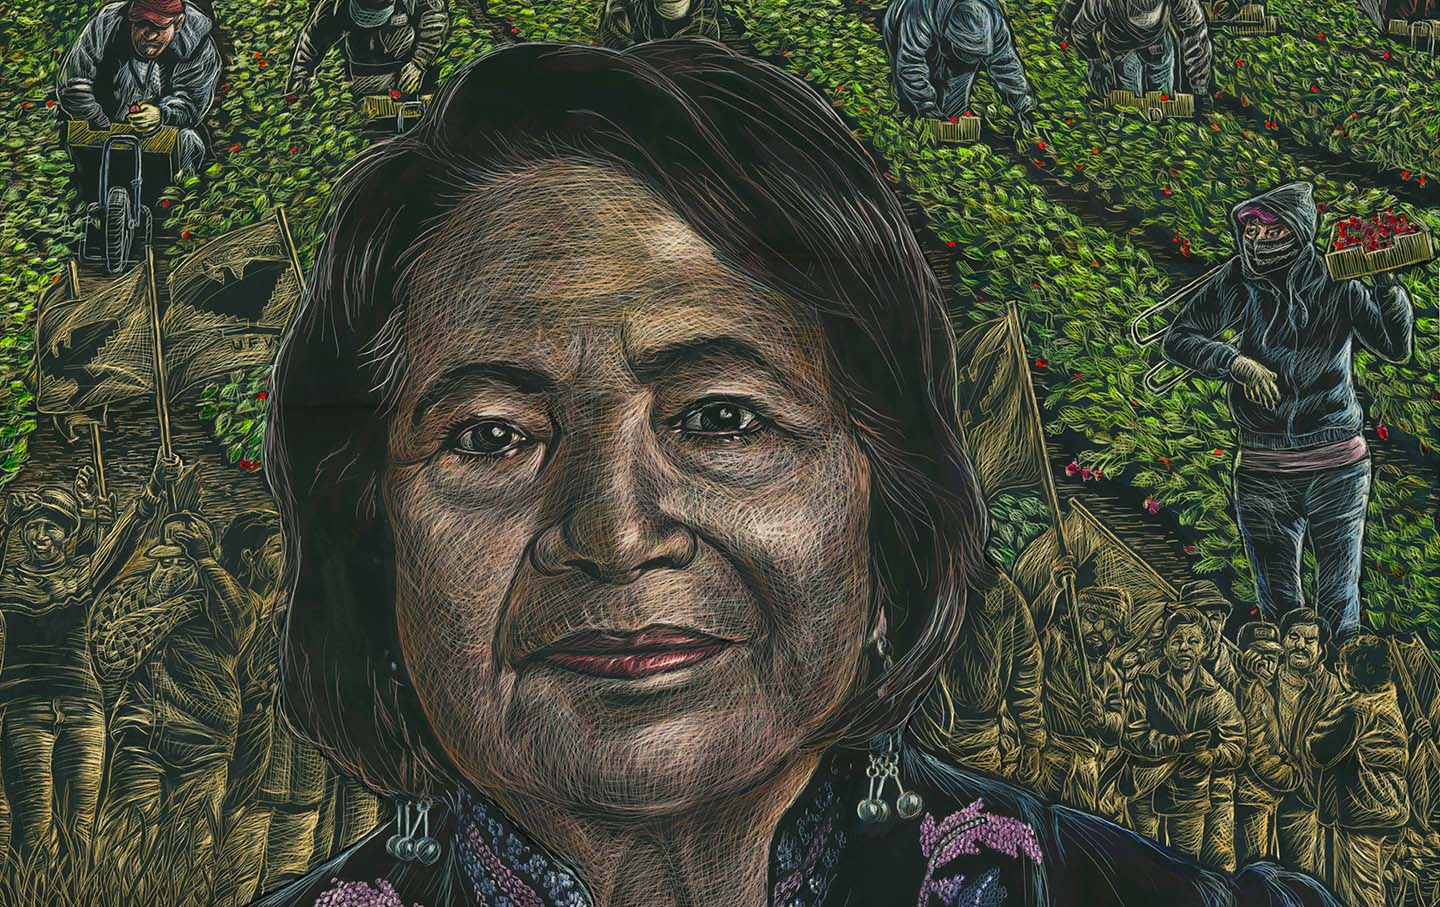 Celebrating Labor Activist Dolores Huerta